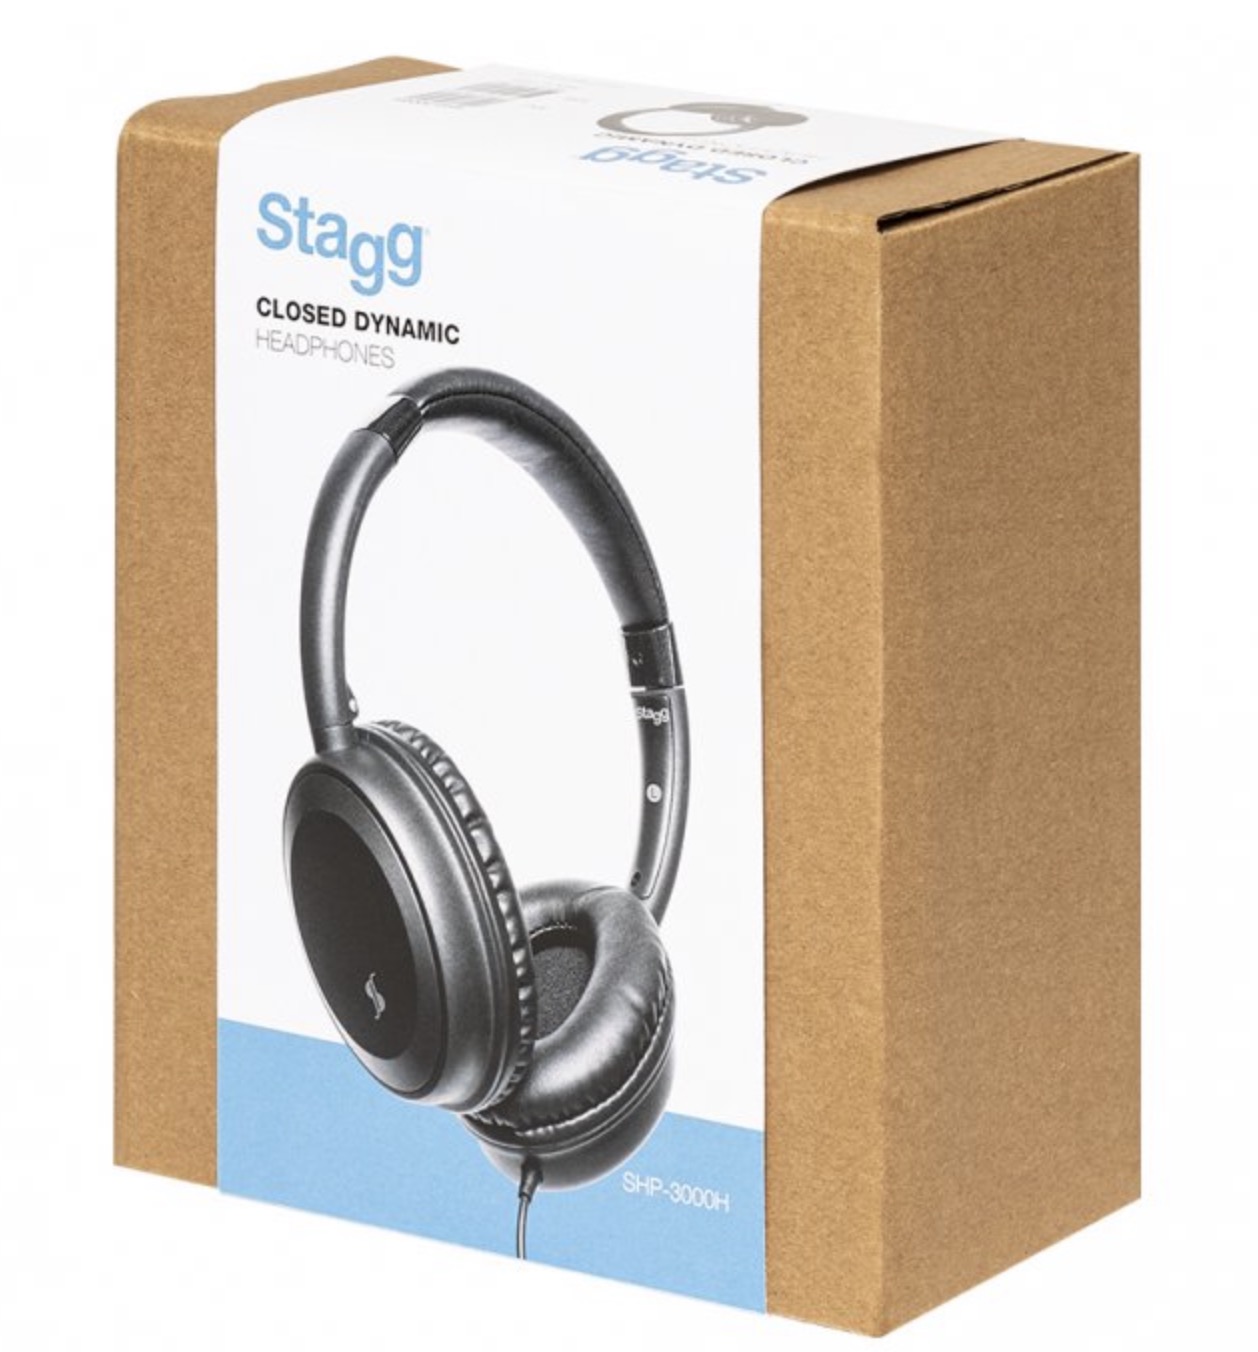 Stagg shp300h Over-Ear hoofdtelefoon